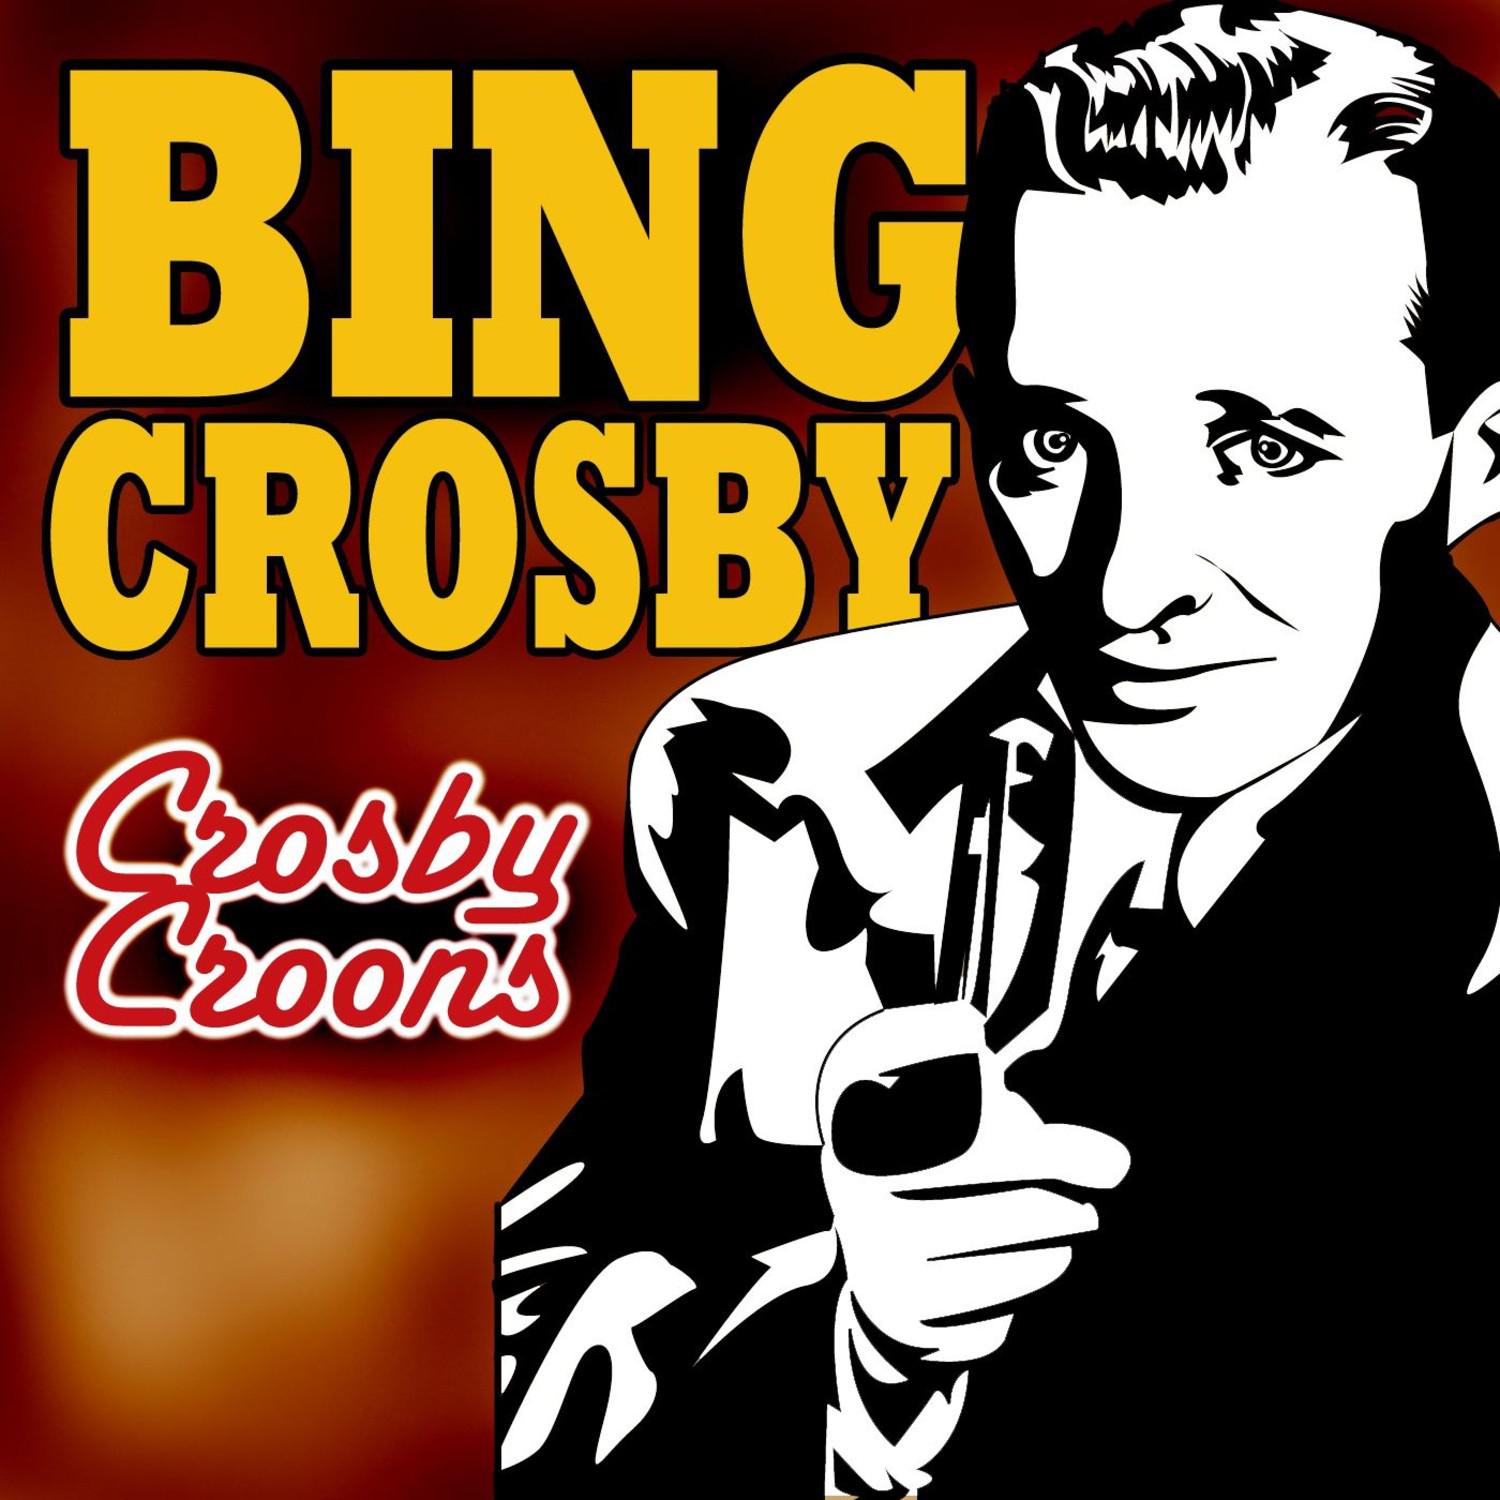 Crosby Croons